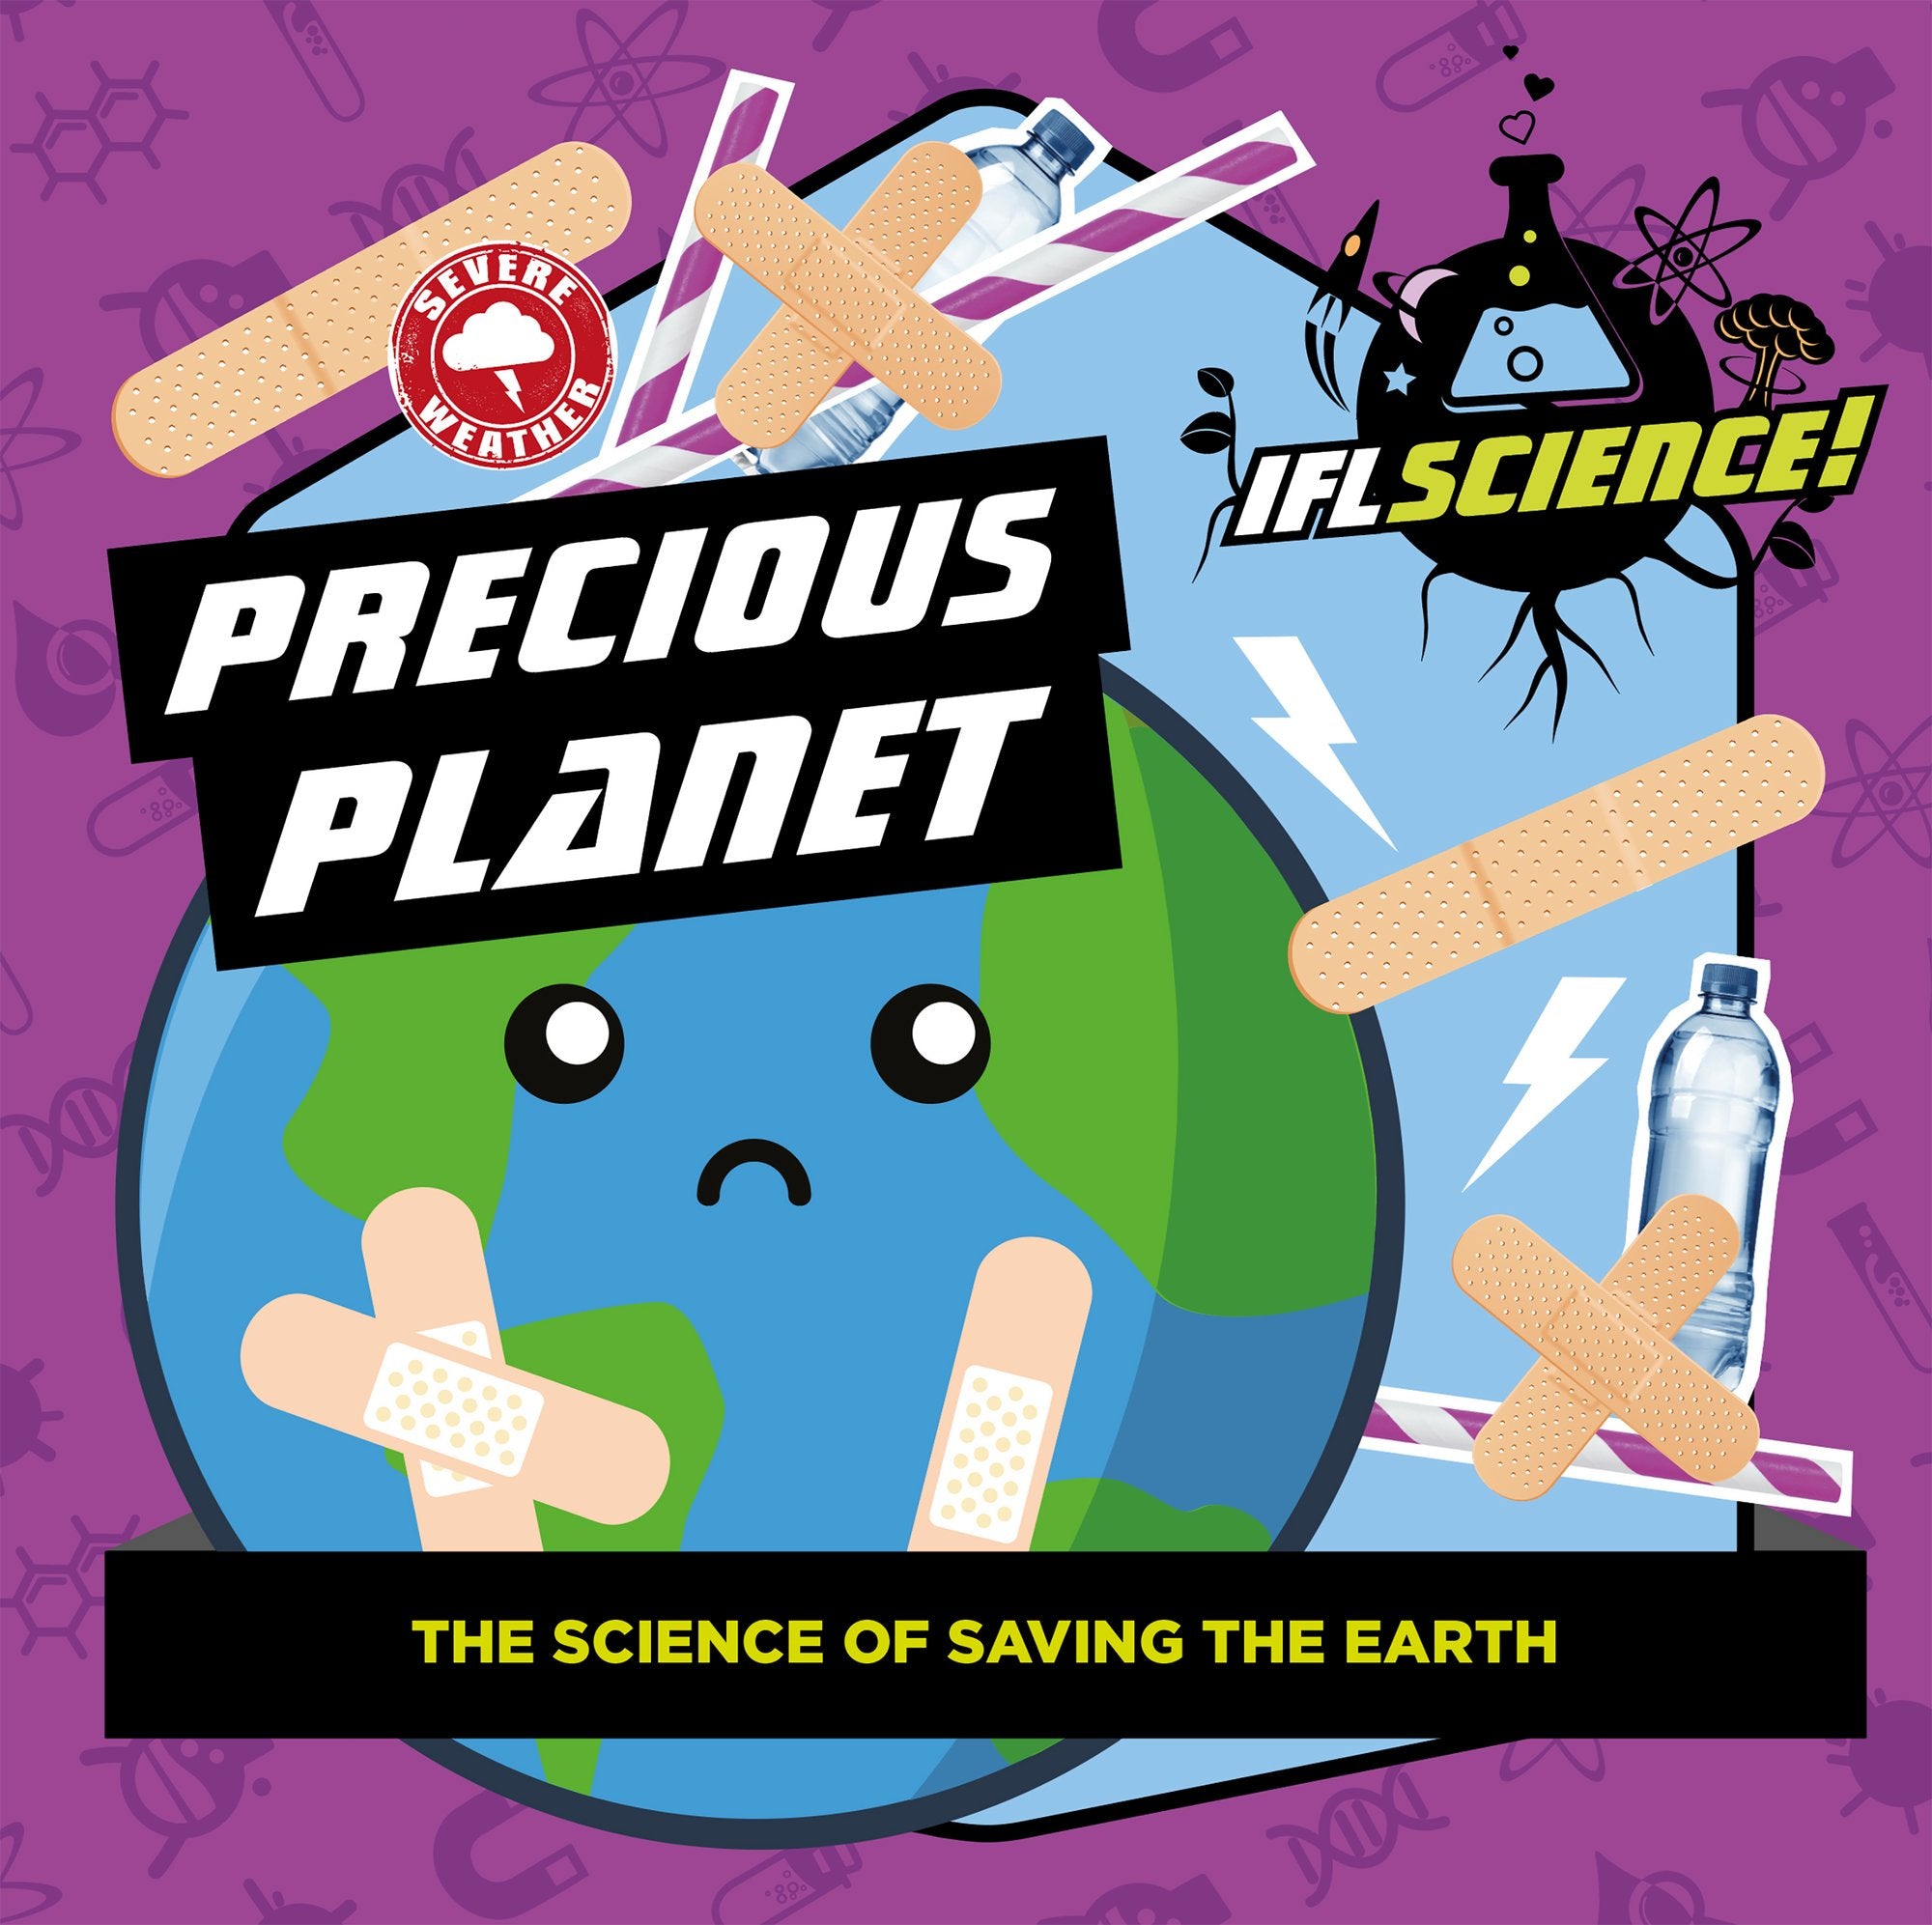 IFLScience: Precious Planet